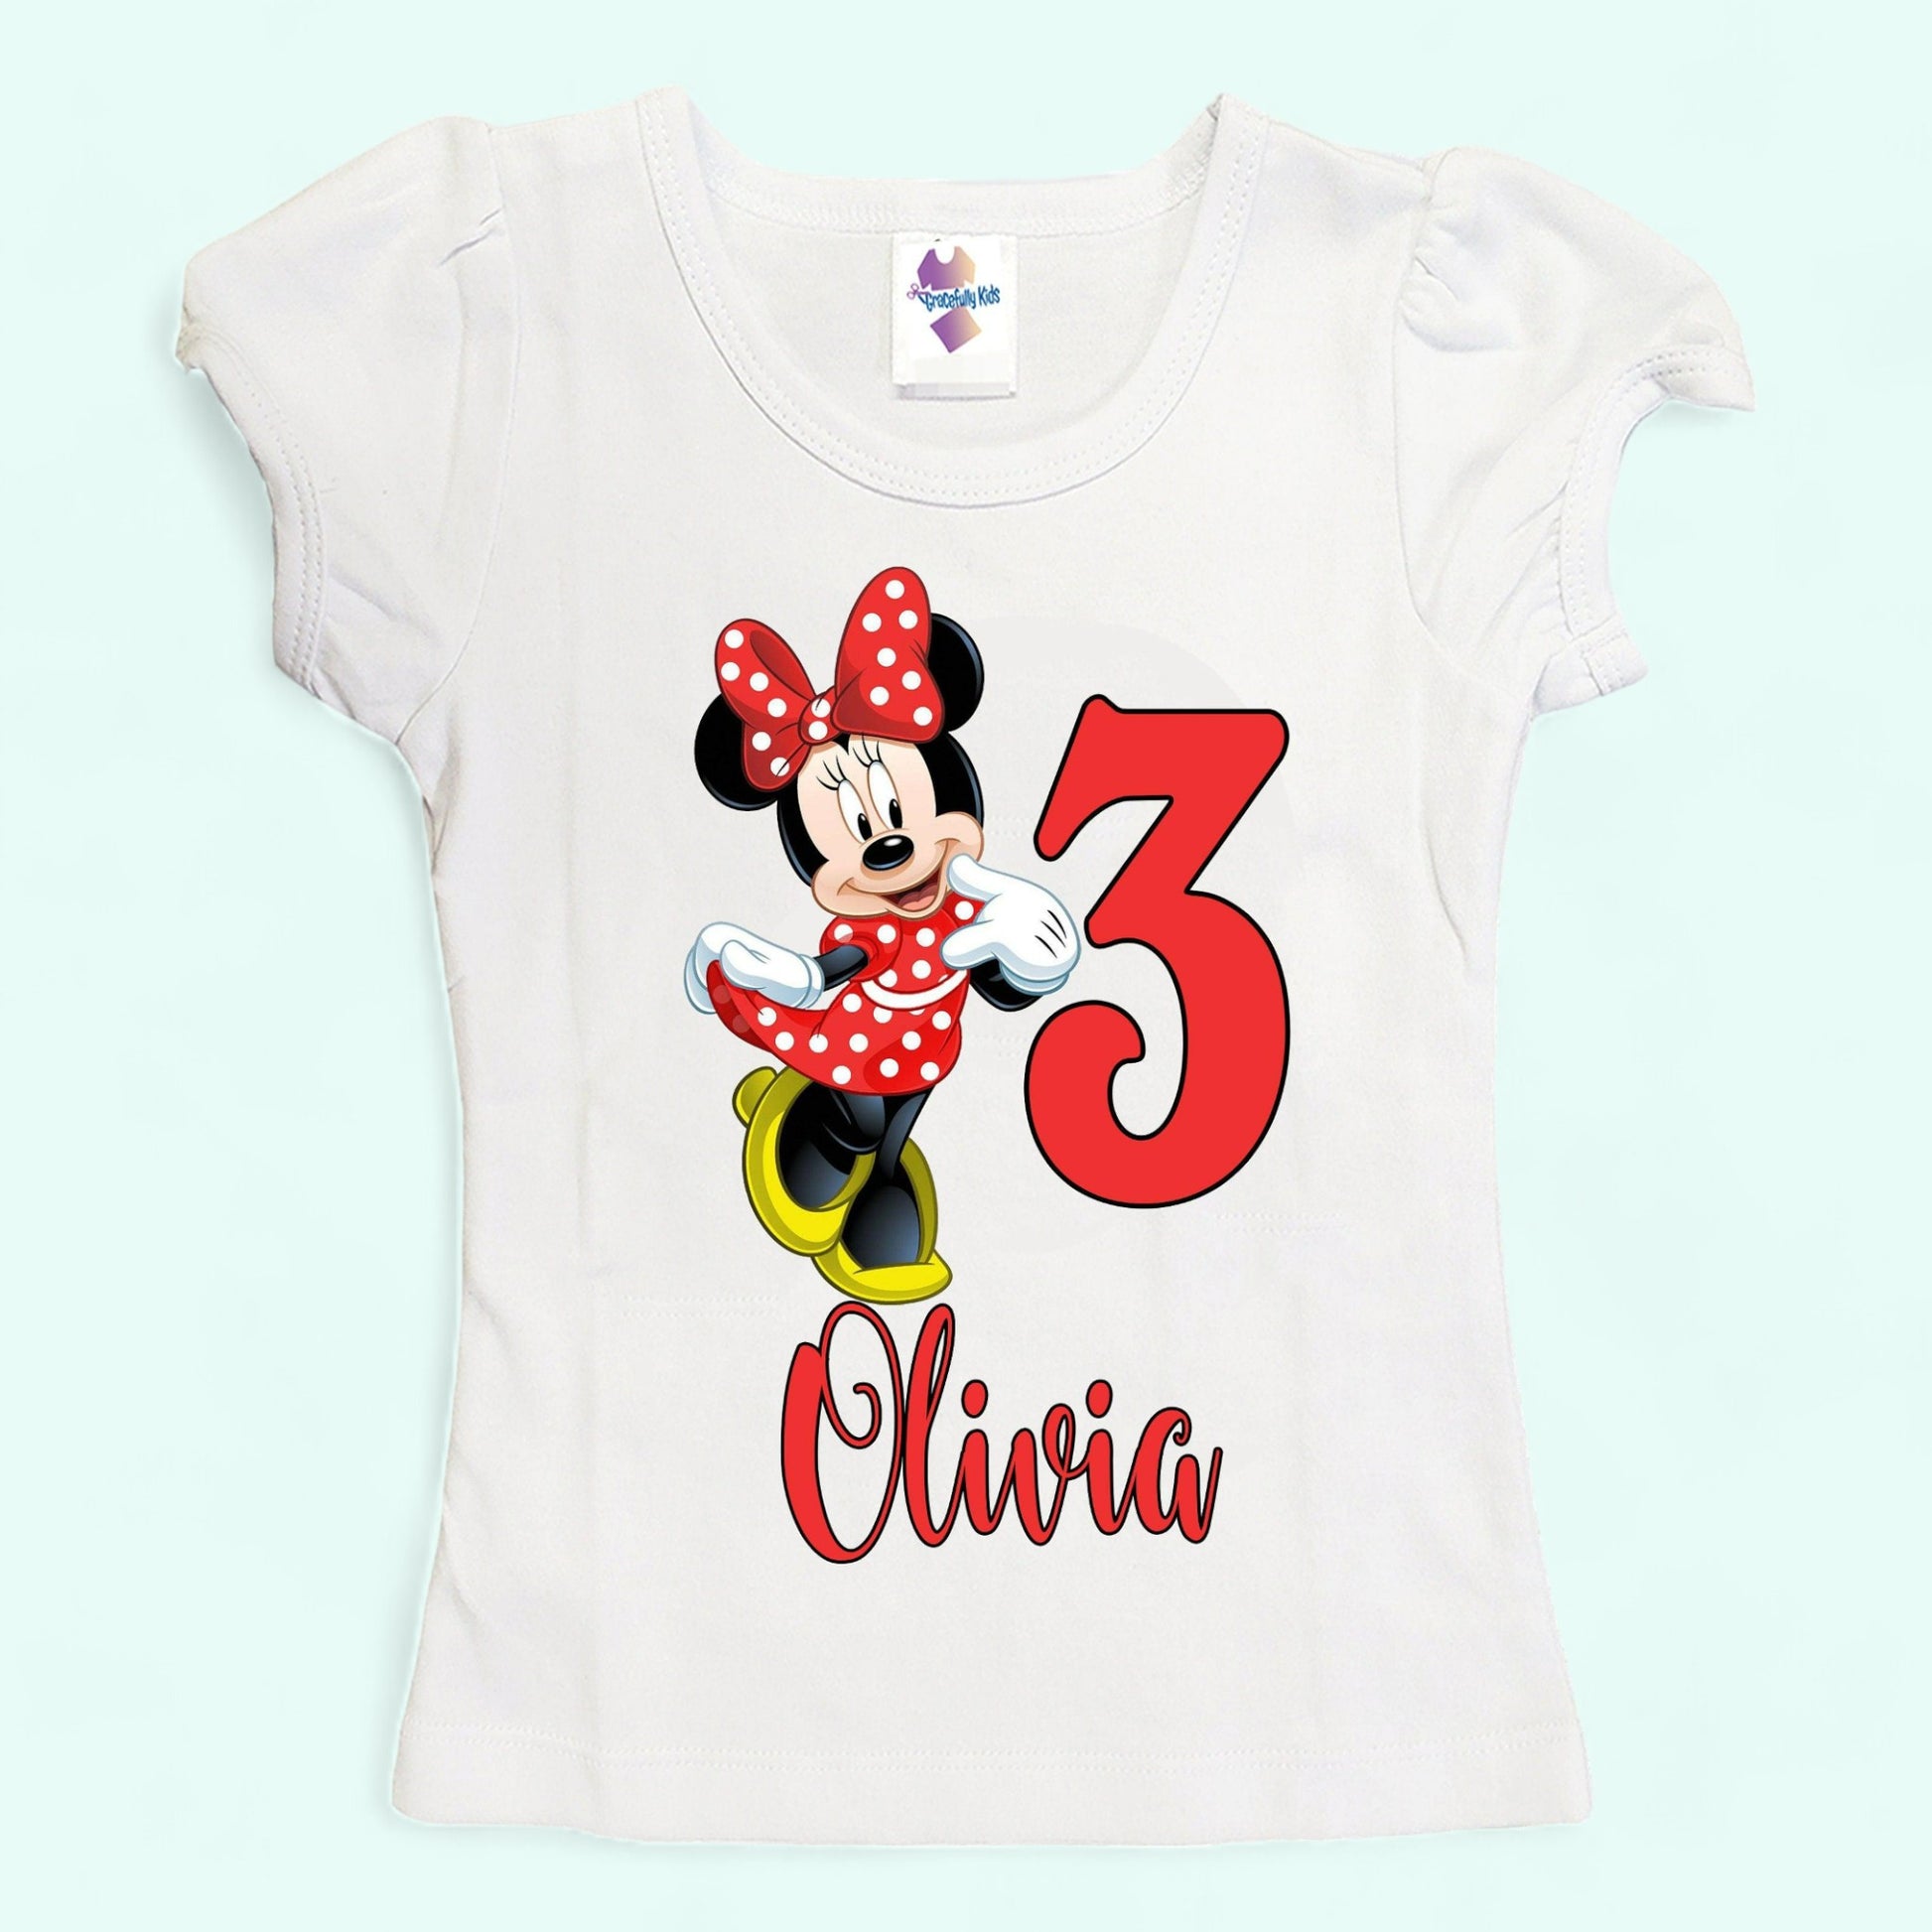 Minnie mouse birthday shirt